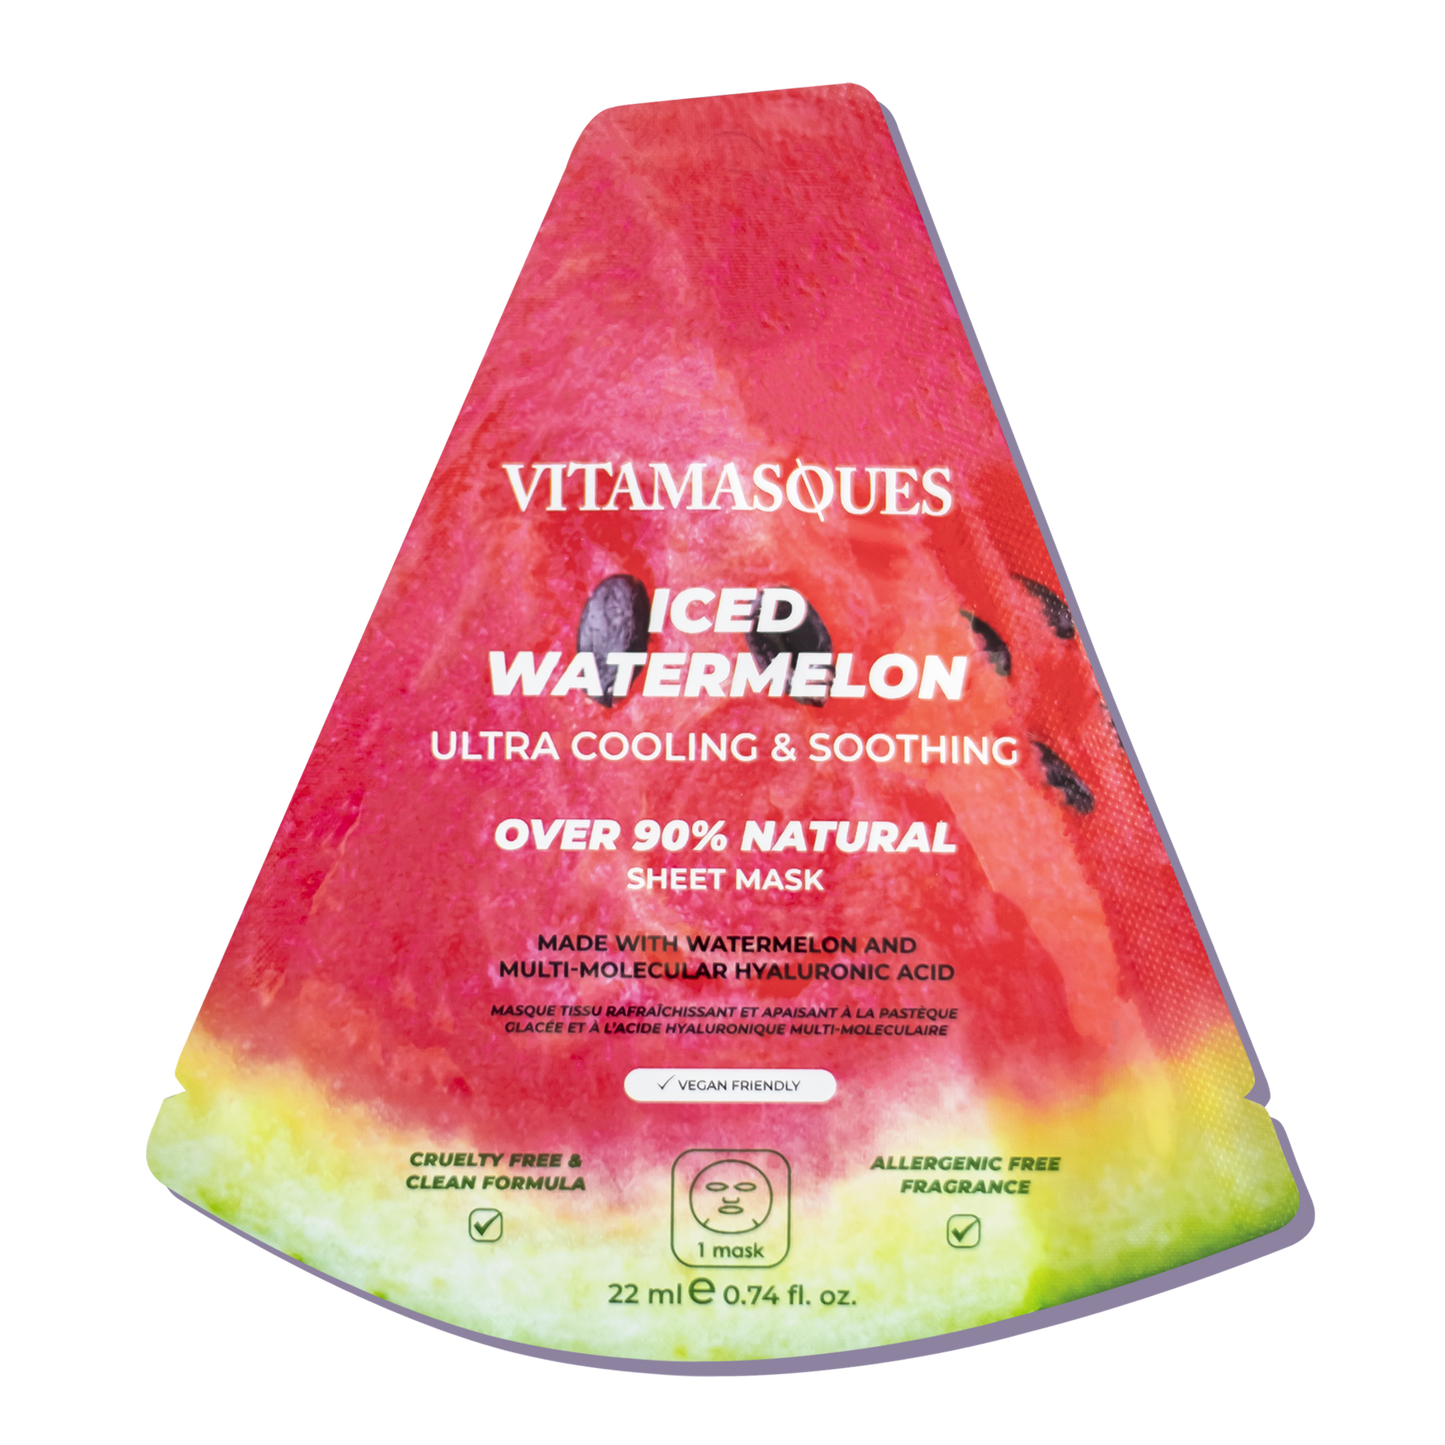 Iced Watermelon Sheet Mask